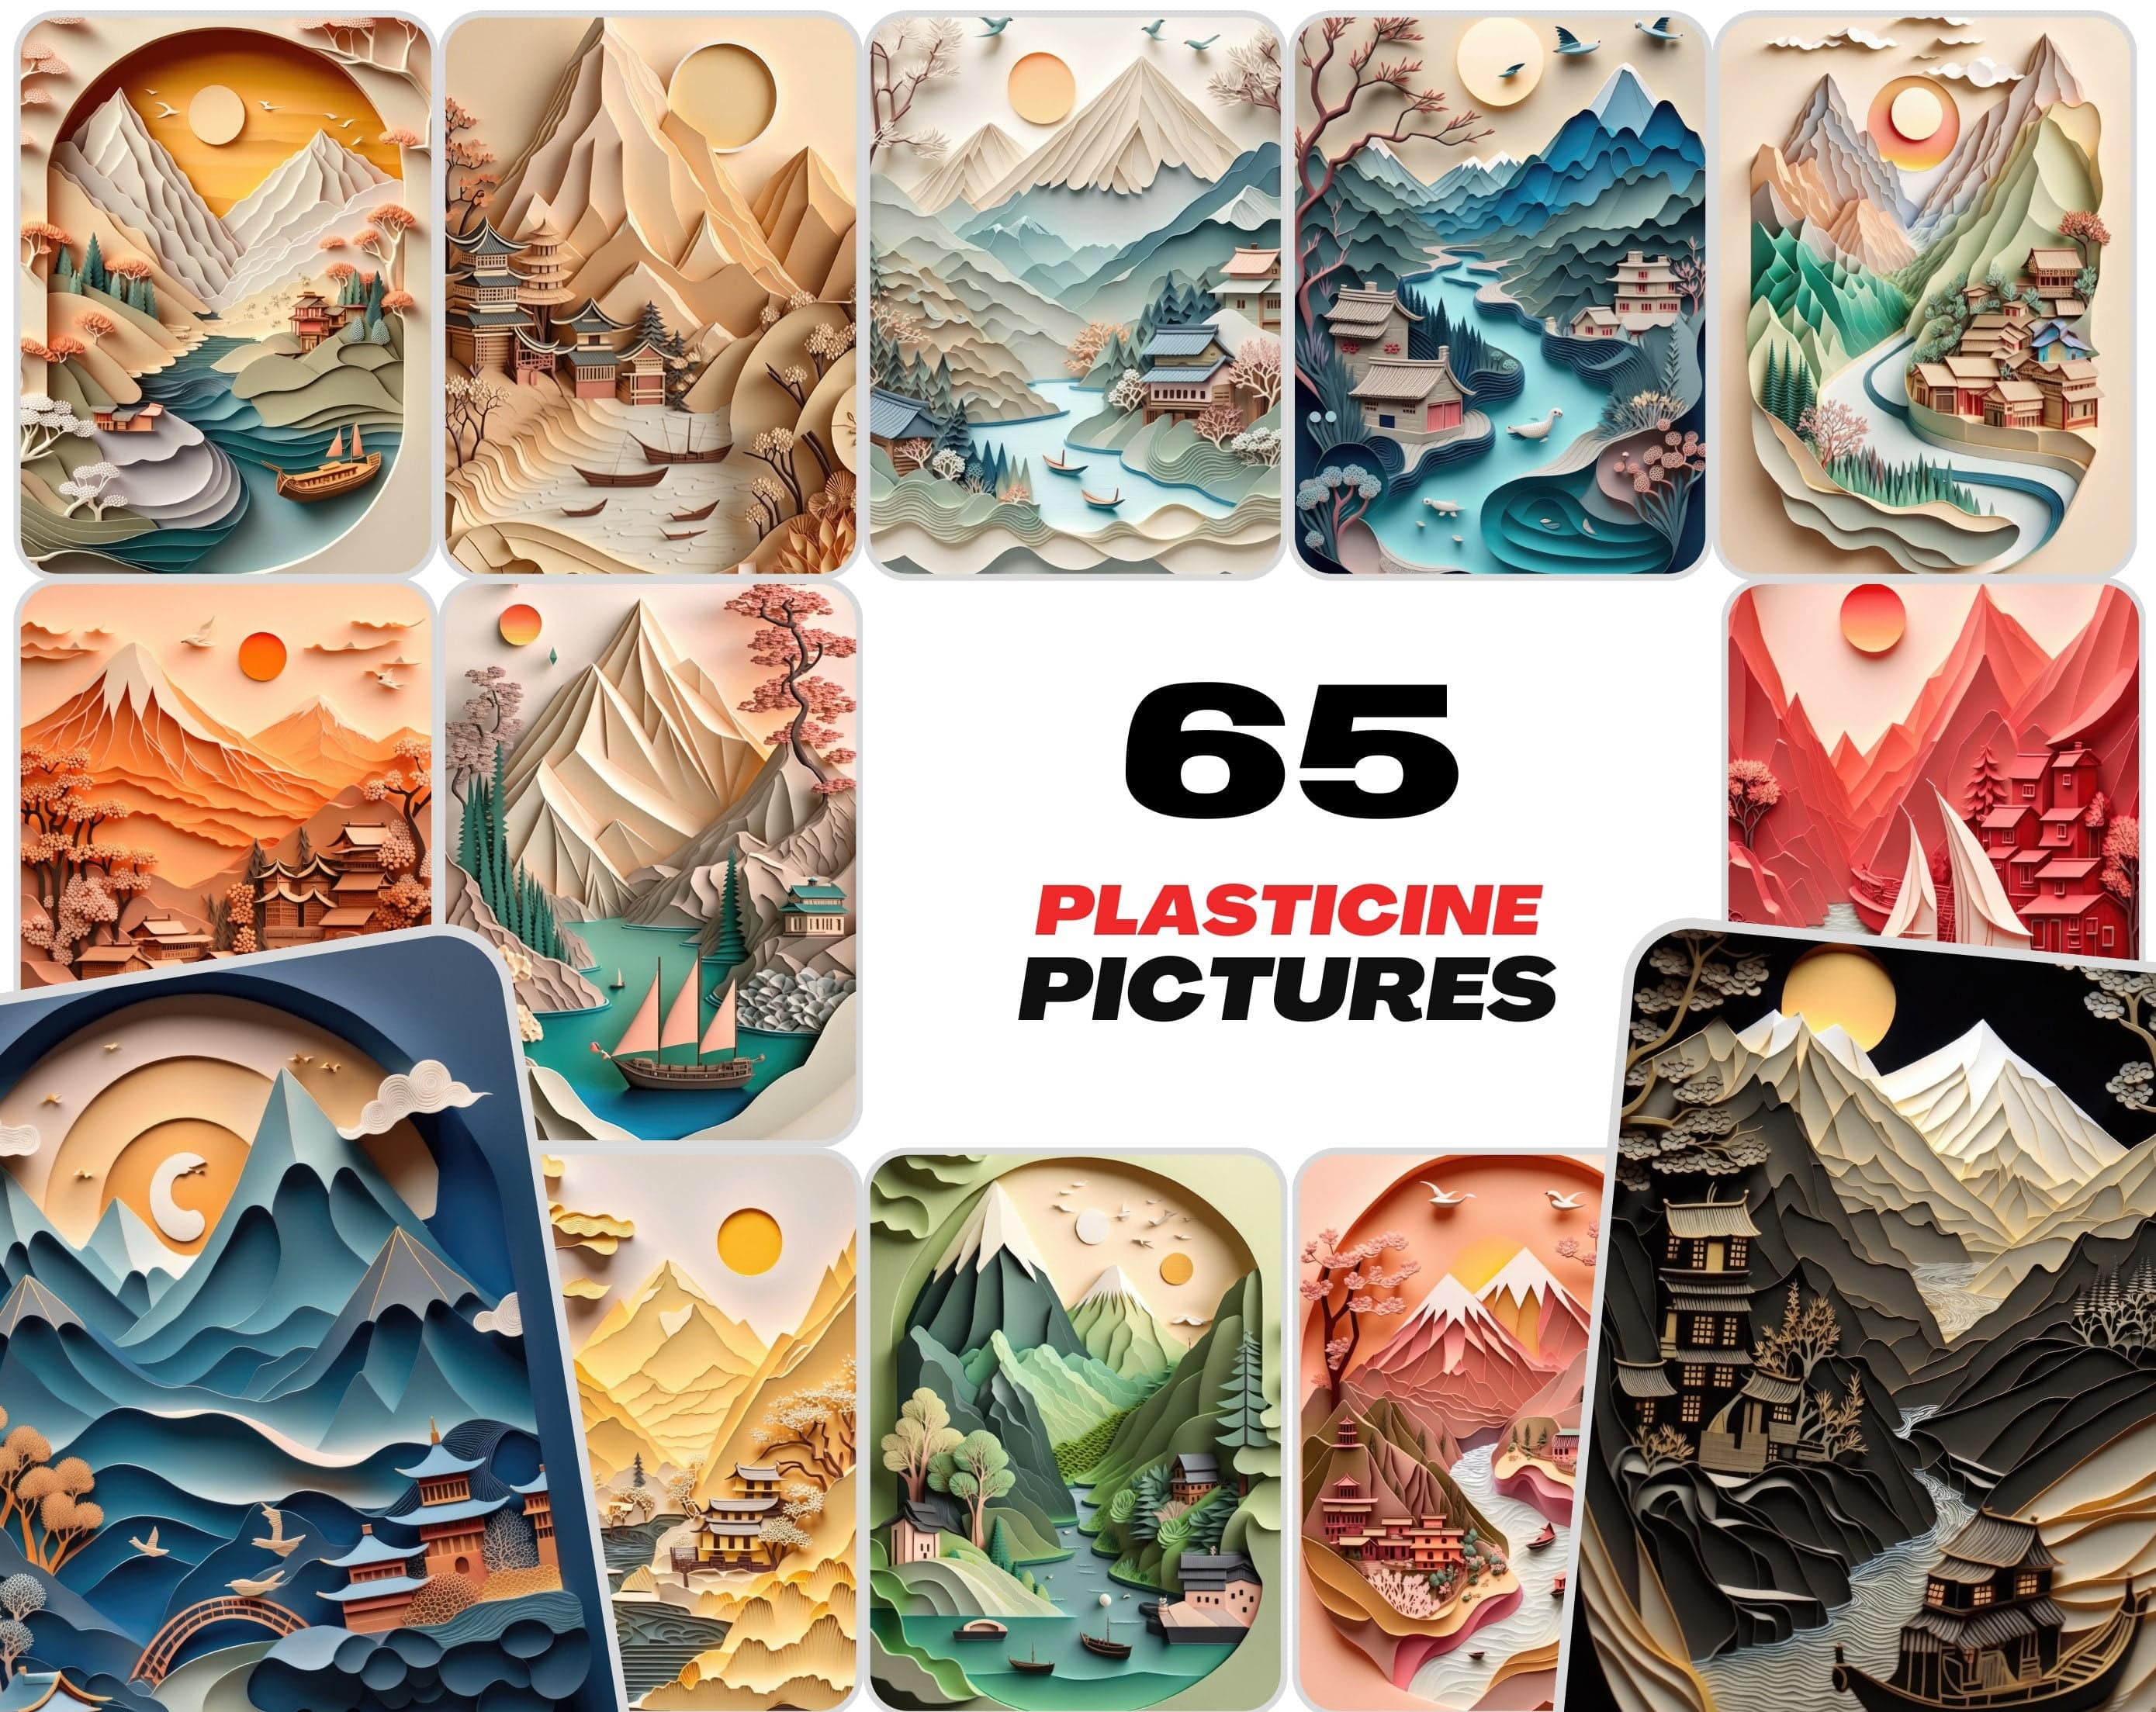 65 Plasticine Pictures Bundle, Colorful Clay Art, Handmade Modelling Clay Images Digital Download Sumobundle